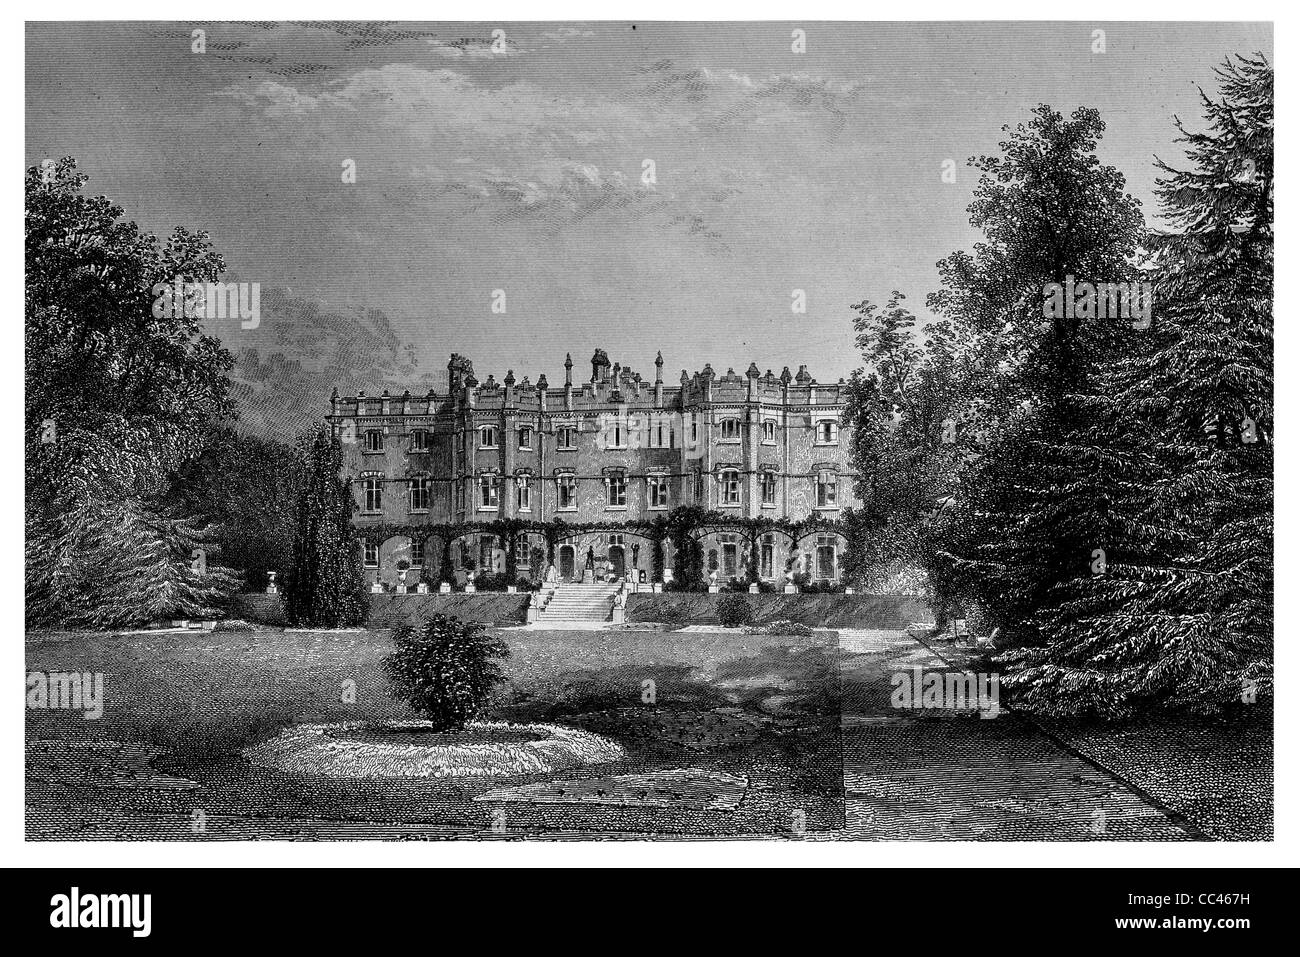 Hughenden Manor mattone rosso residenza vittoriana High Wycombe Buckinghamshire England country house il Primo ministro Benjamin Disraeli Foto Stock